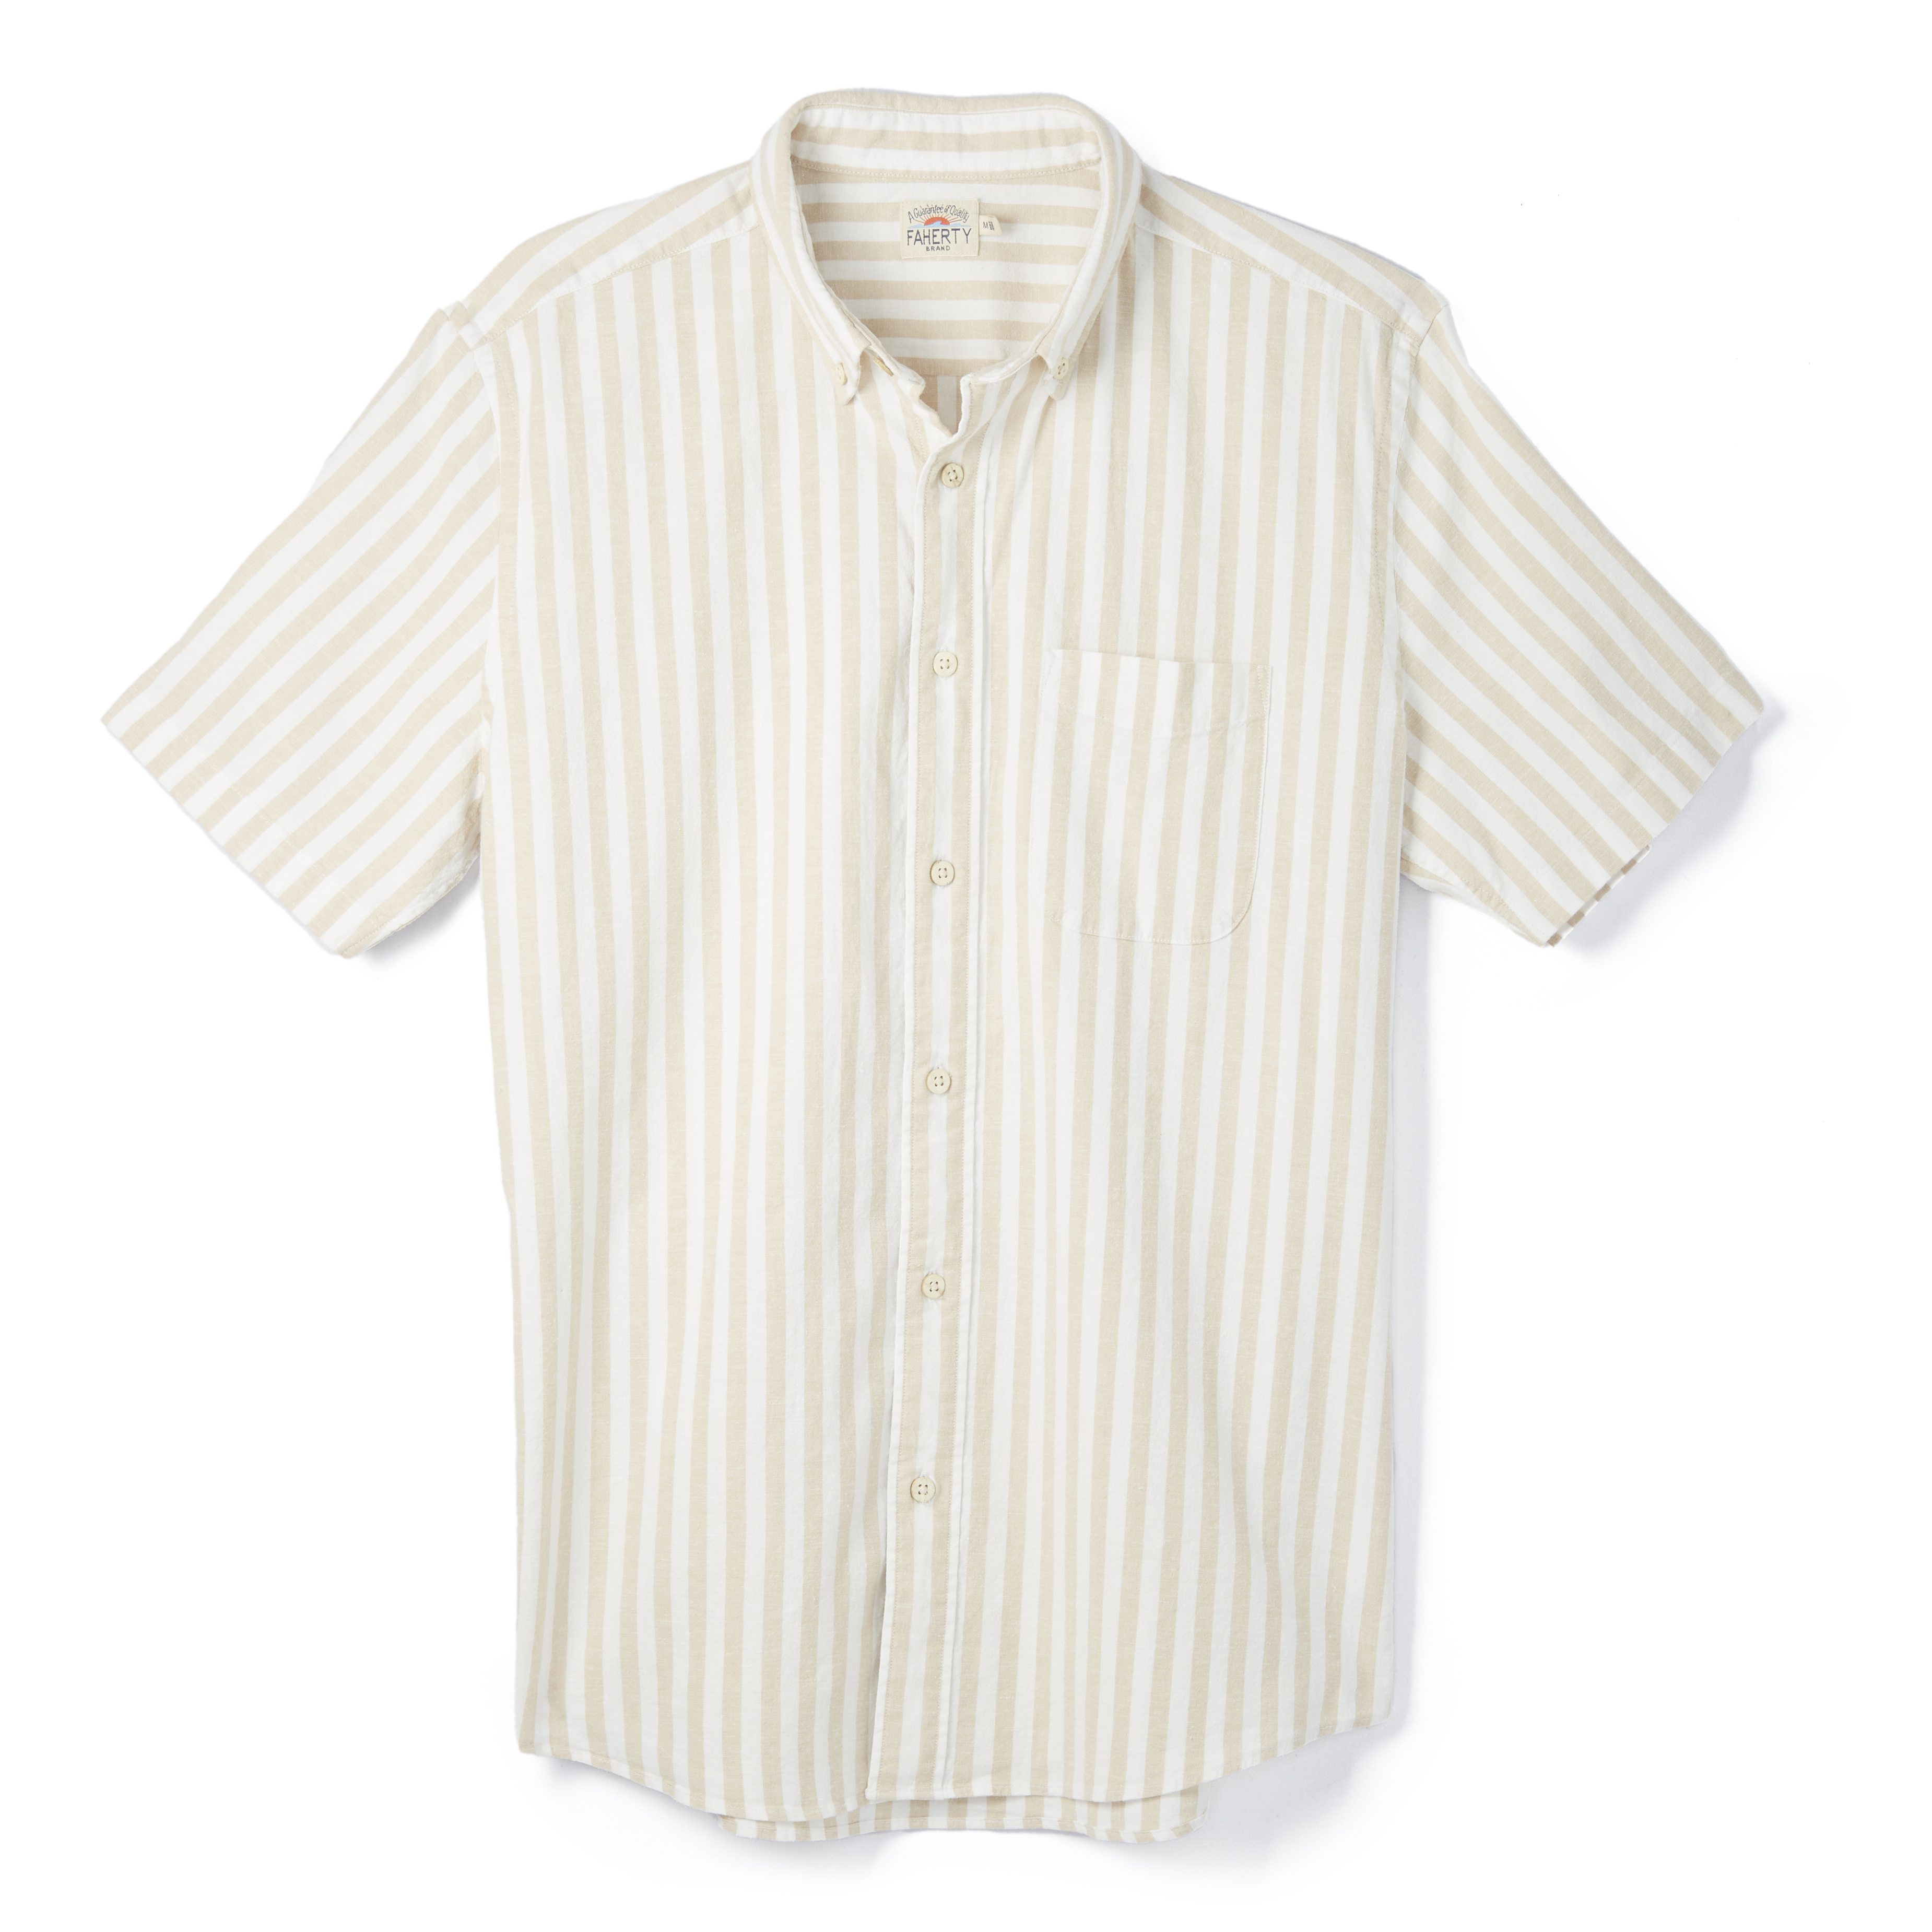 Breeze Short Sleeve Shirt in Sand Shell Stripe